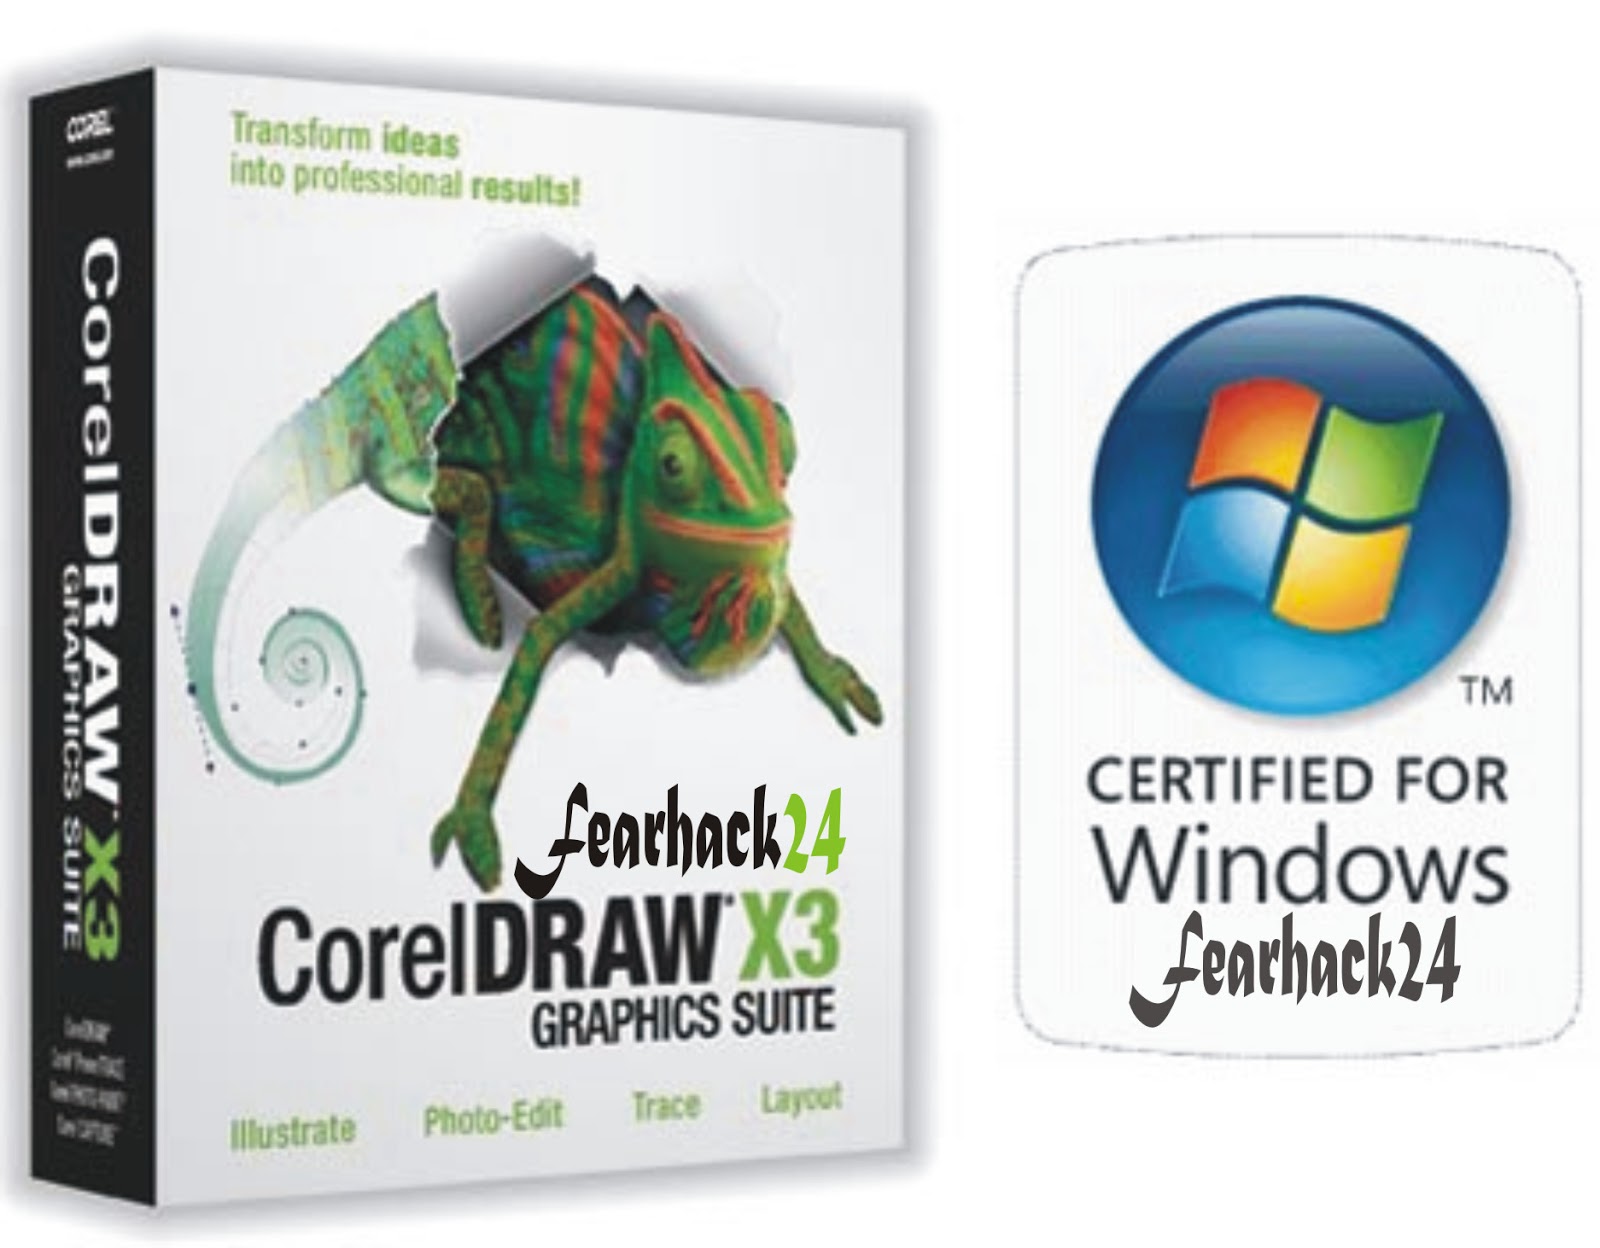 Coreldraw 2013 Free Download Full Version